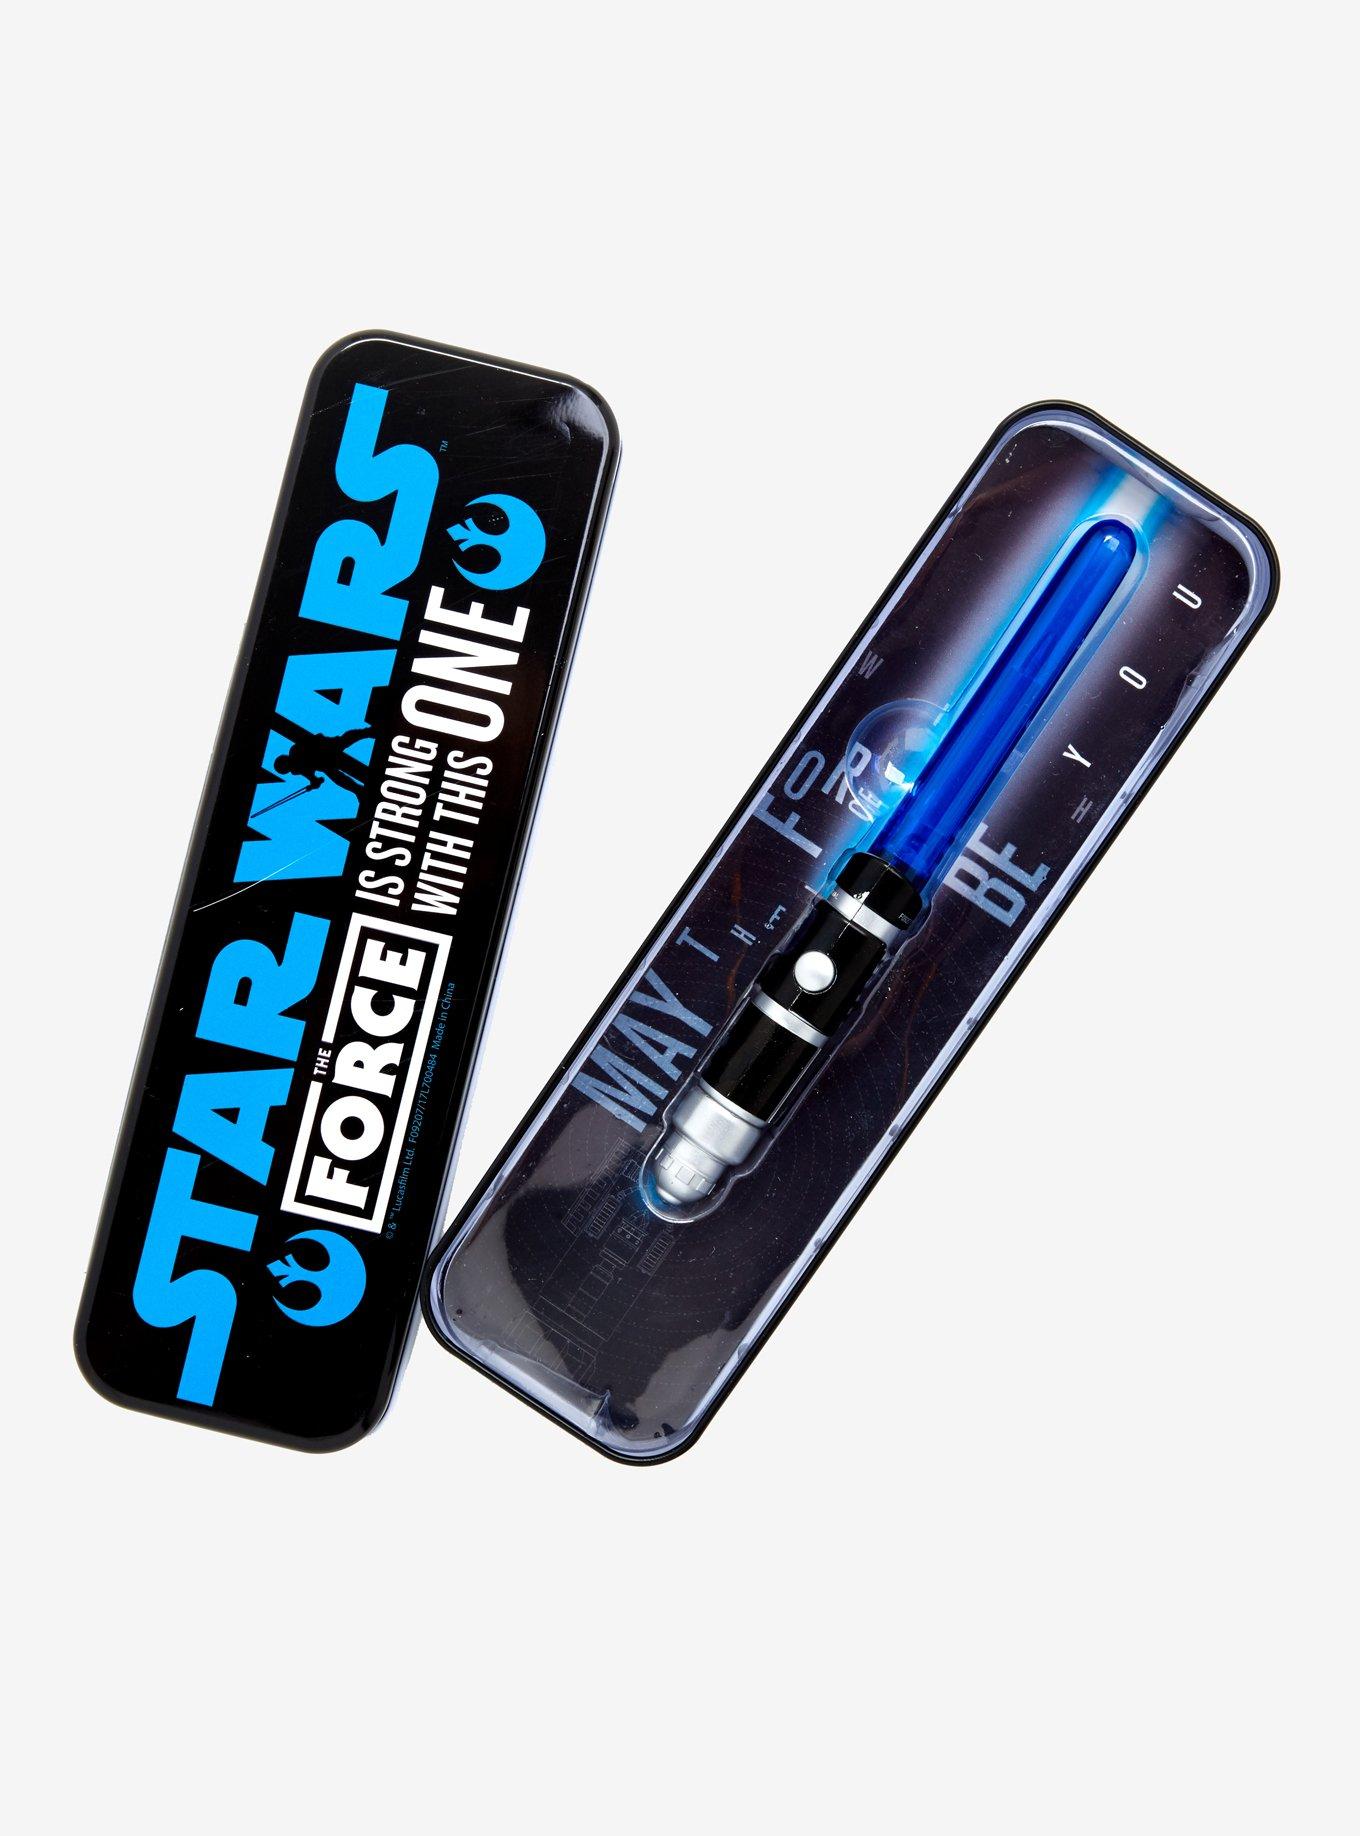 Star Wars Blue Lightsaber Pen, , alternate